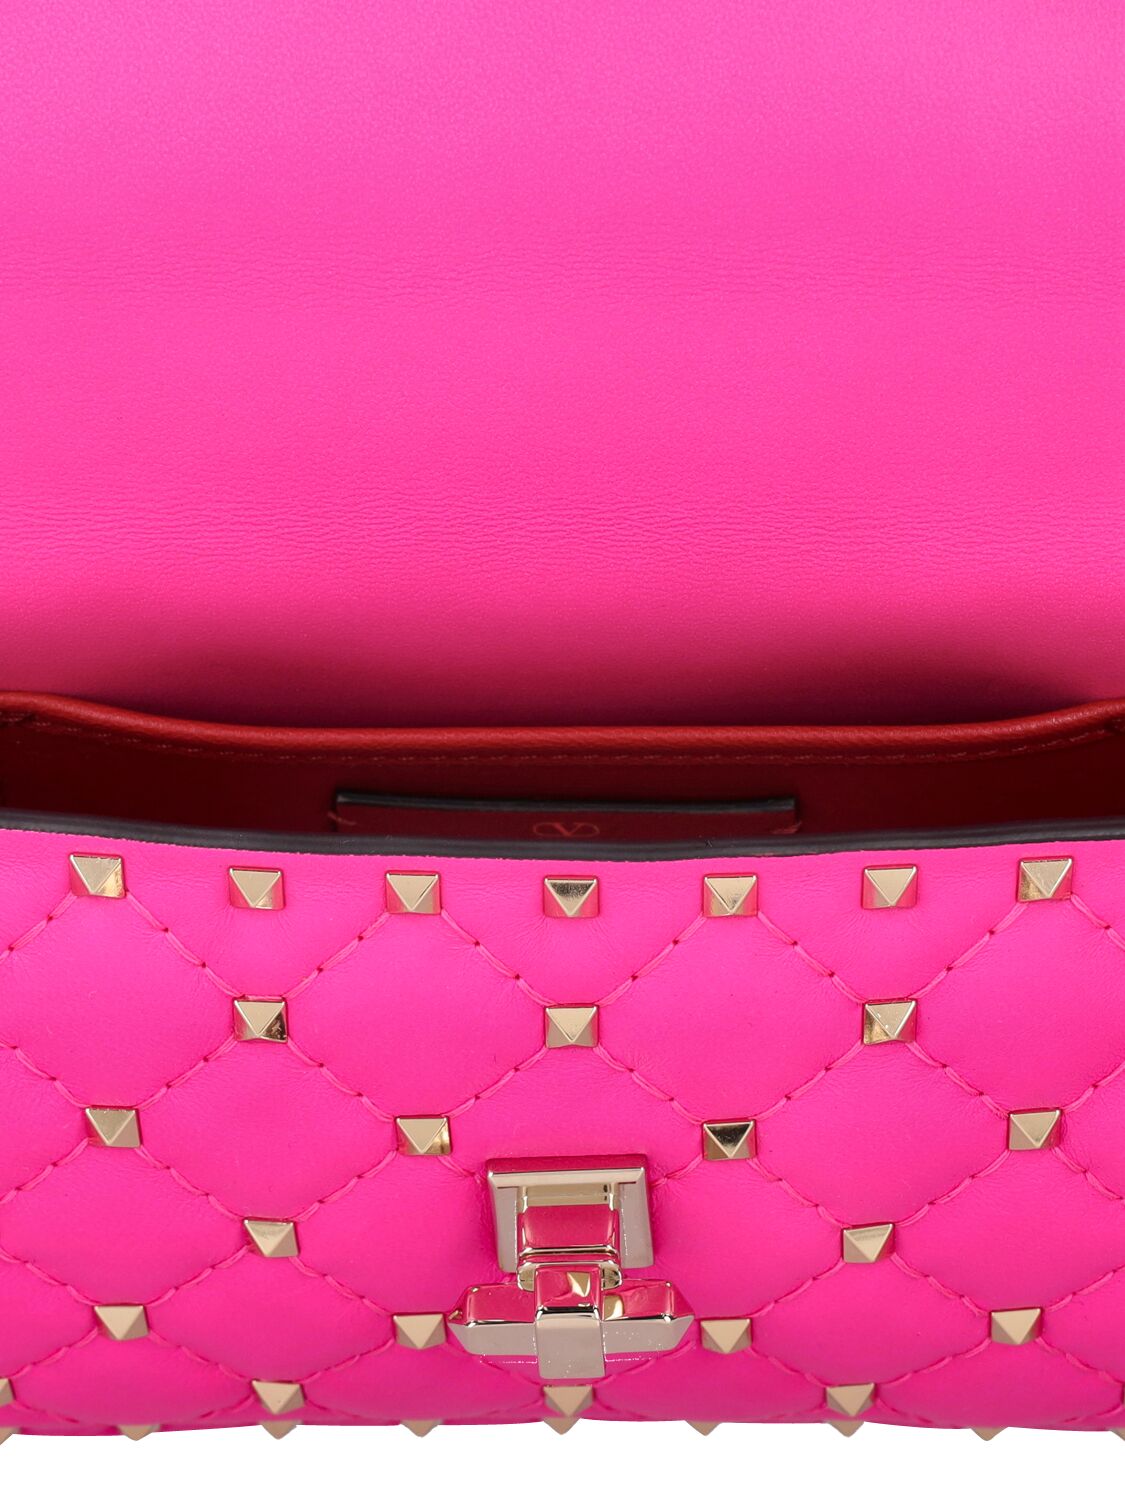 Shop Valentino Rockstud Spike Nappa Top Handle Bag In Pp Pink